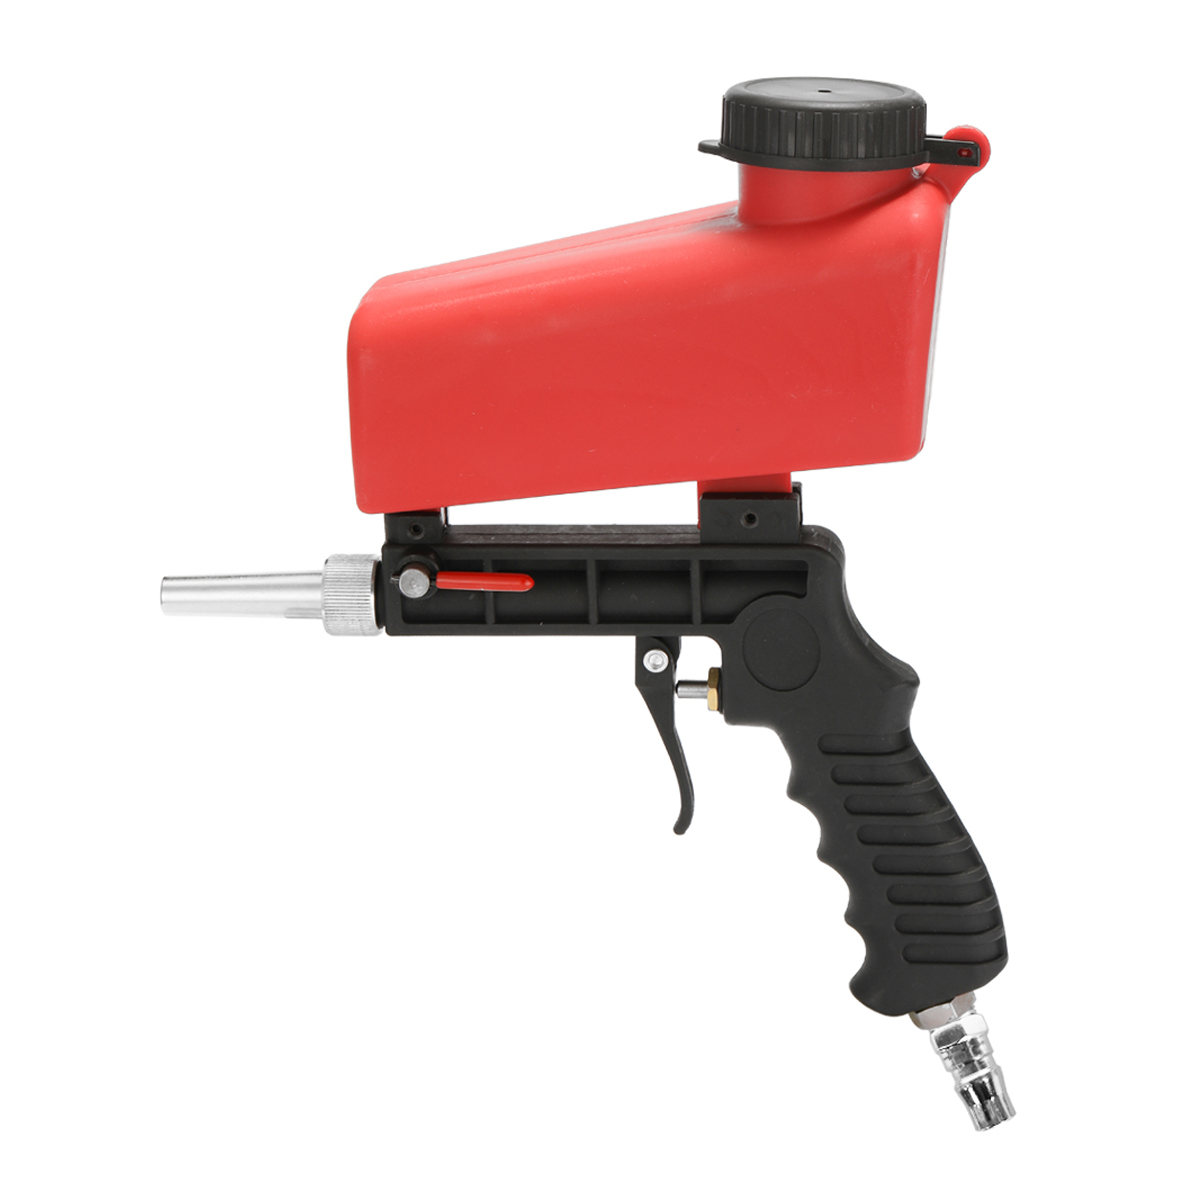 Portable-Gravity-Pneumatic-Sandblaster-Sprayer-Tool-Sandblasting-Machine-Removing-Spot-Rust-1607551-8